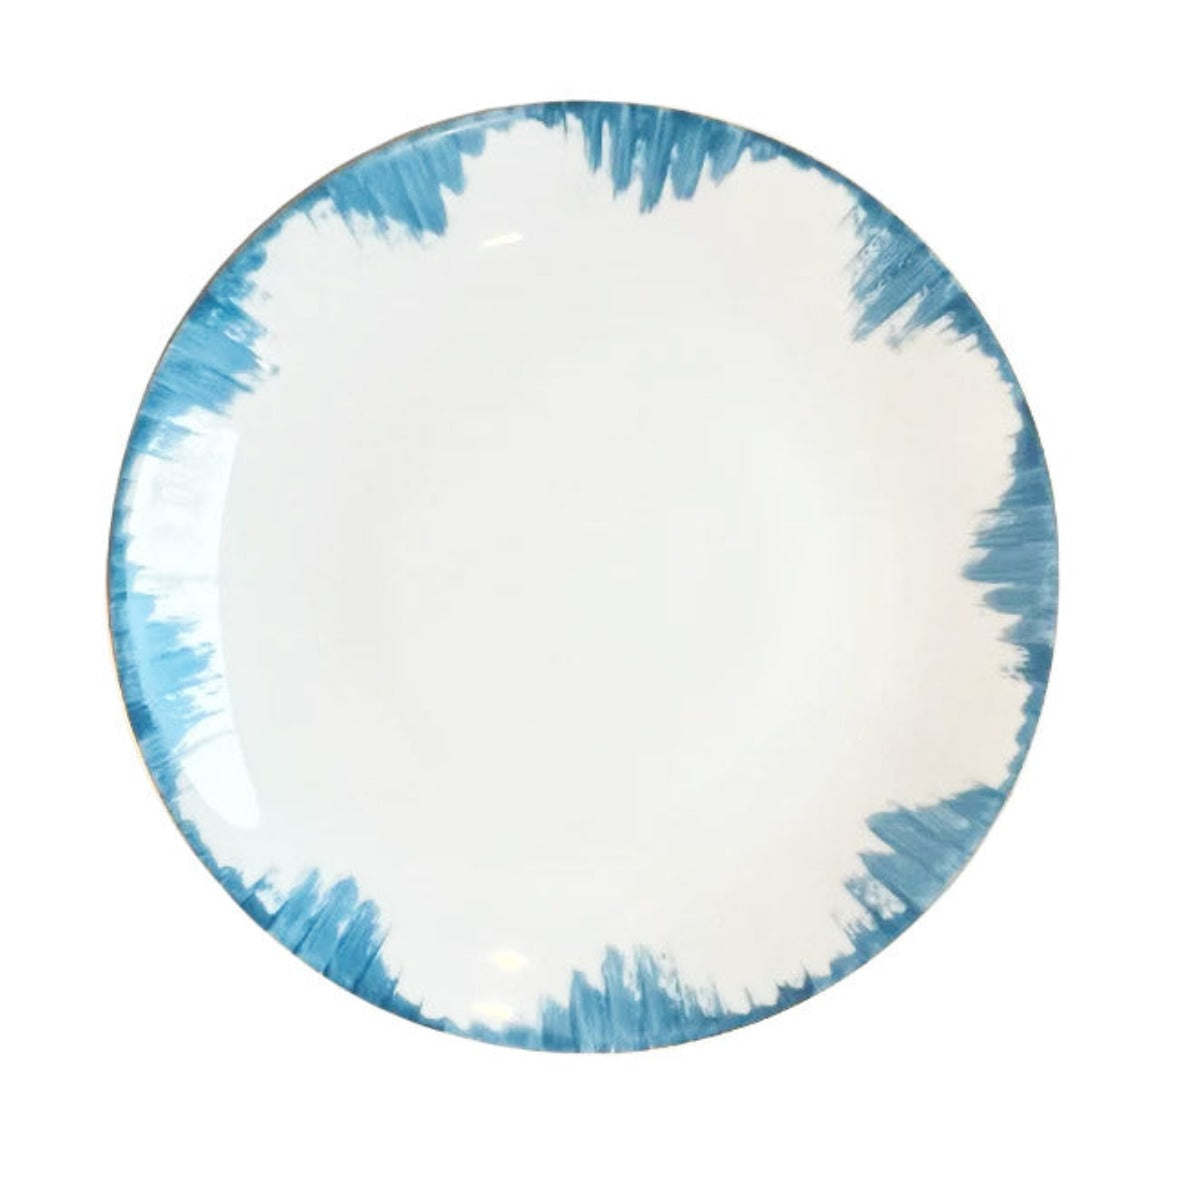 Marie Daâge Iris 2 Coupe Dinner Plate, Blue Lagoon-Bespoke Designs